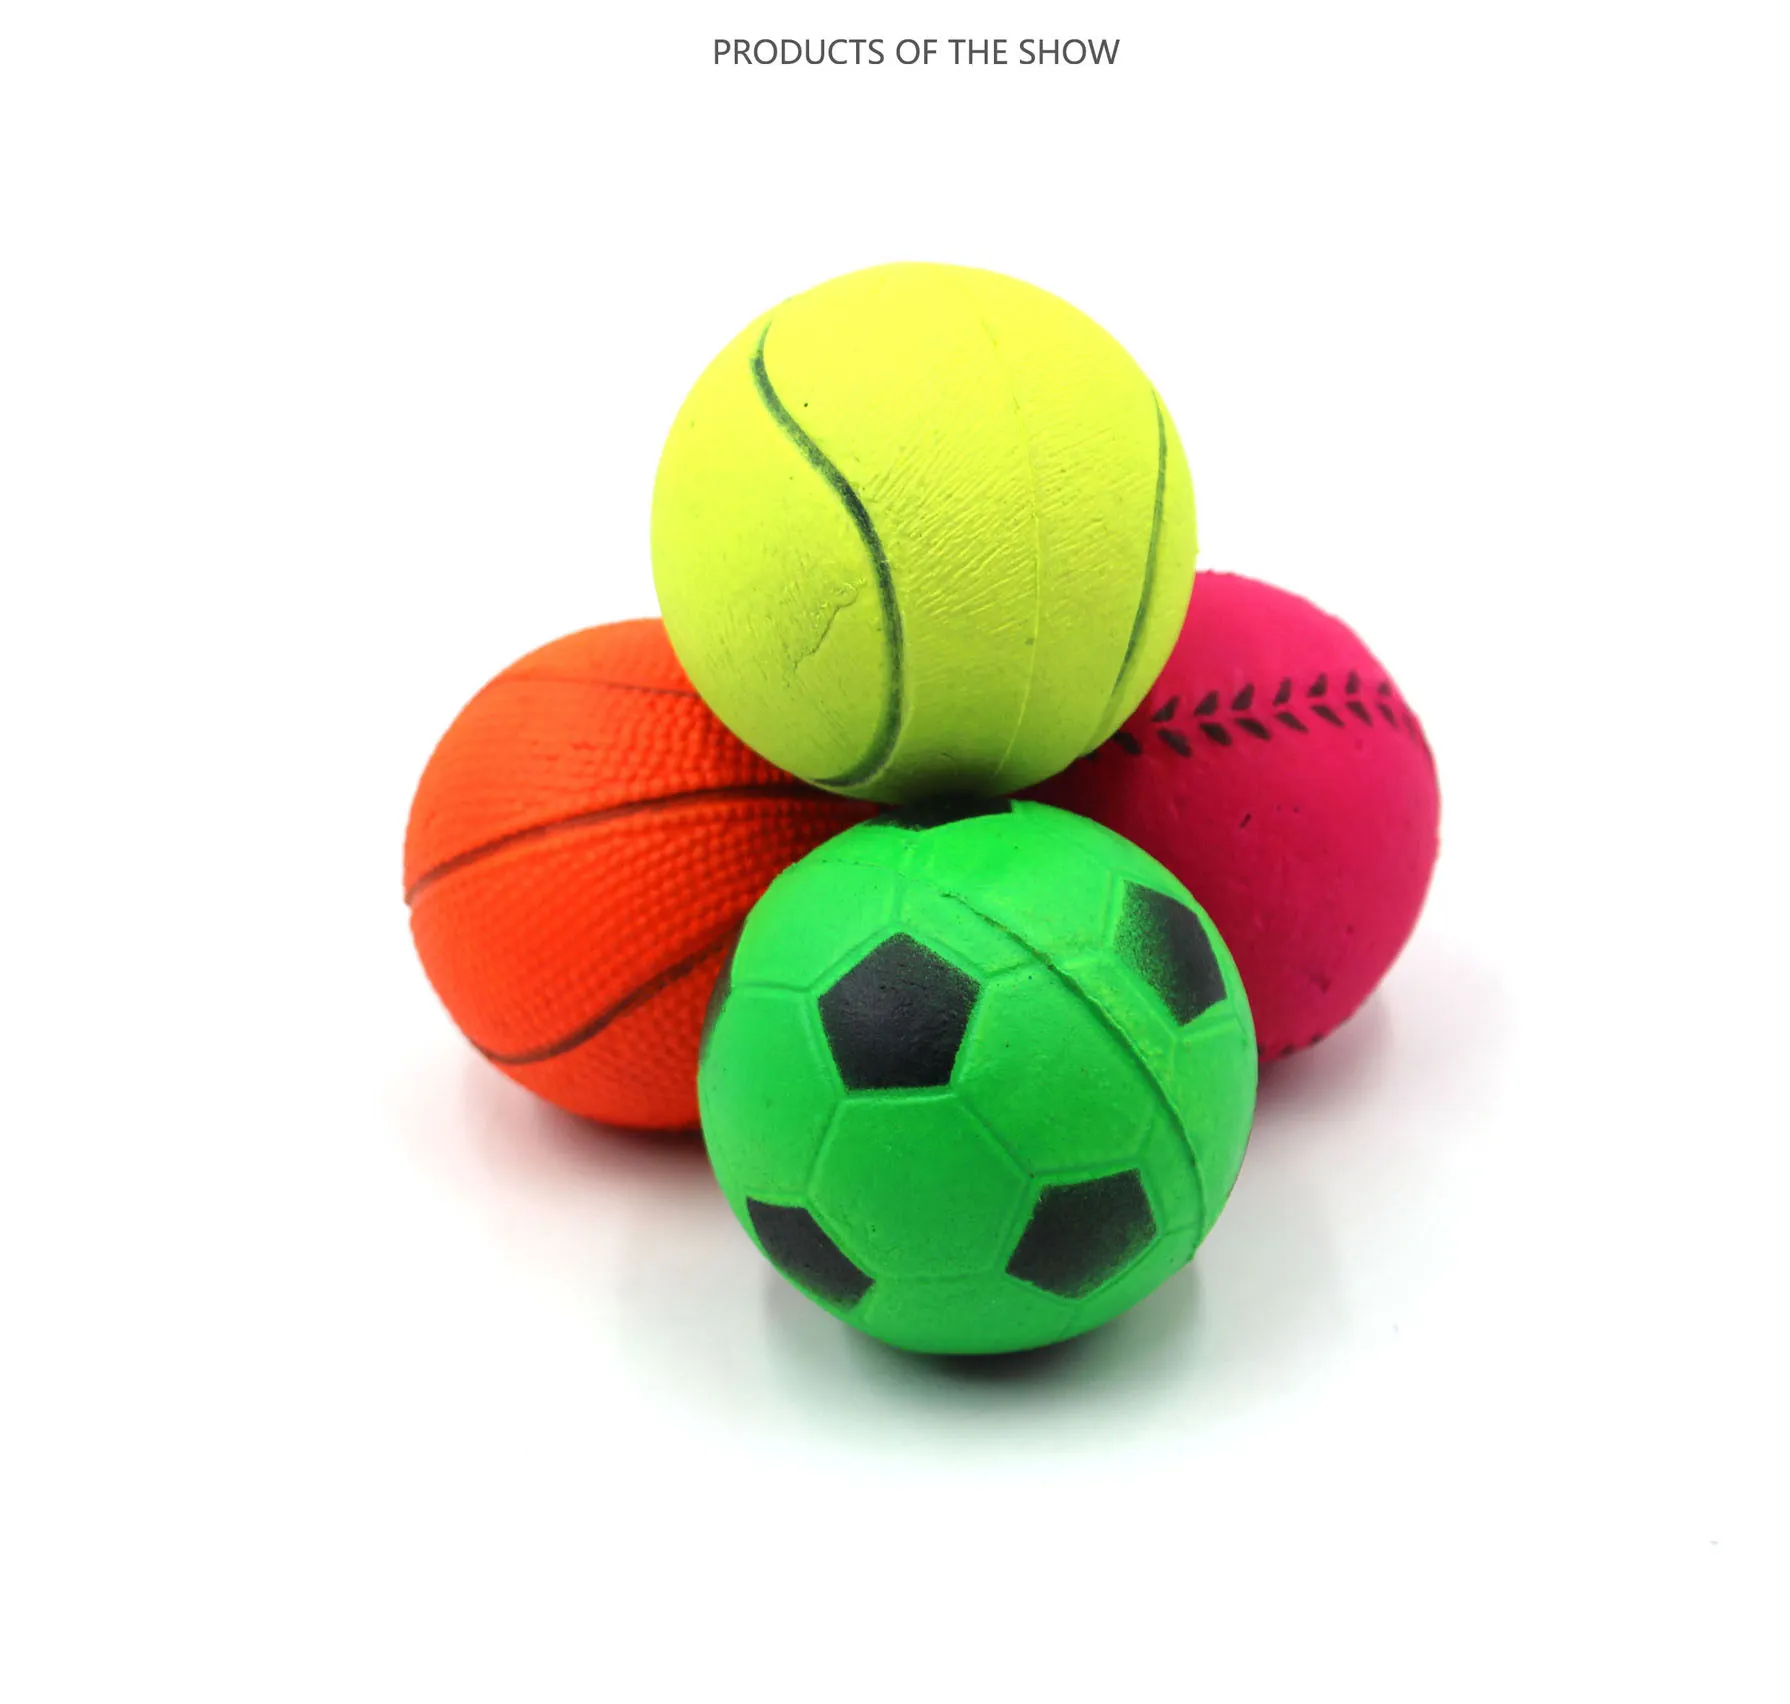 Pelota de goma duradera de alta elasticidad para perros, pelota interactiva  sólida y duradera, jugue JM